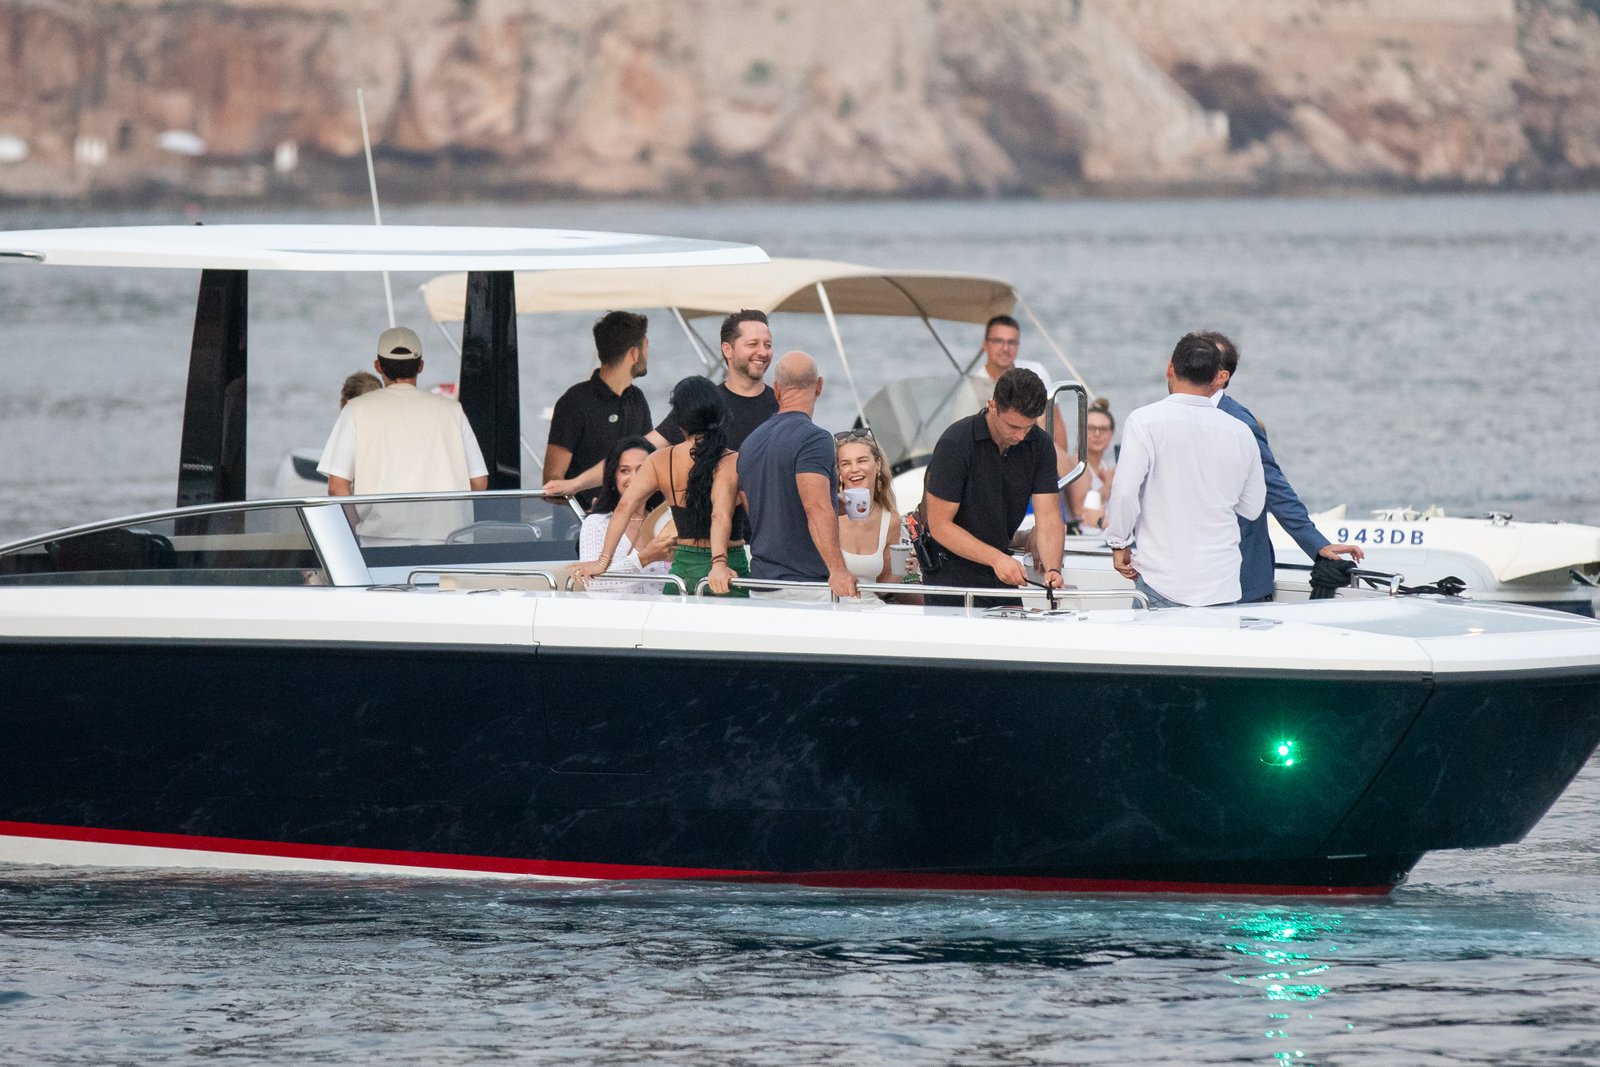 Jeff Bezos on a boat